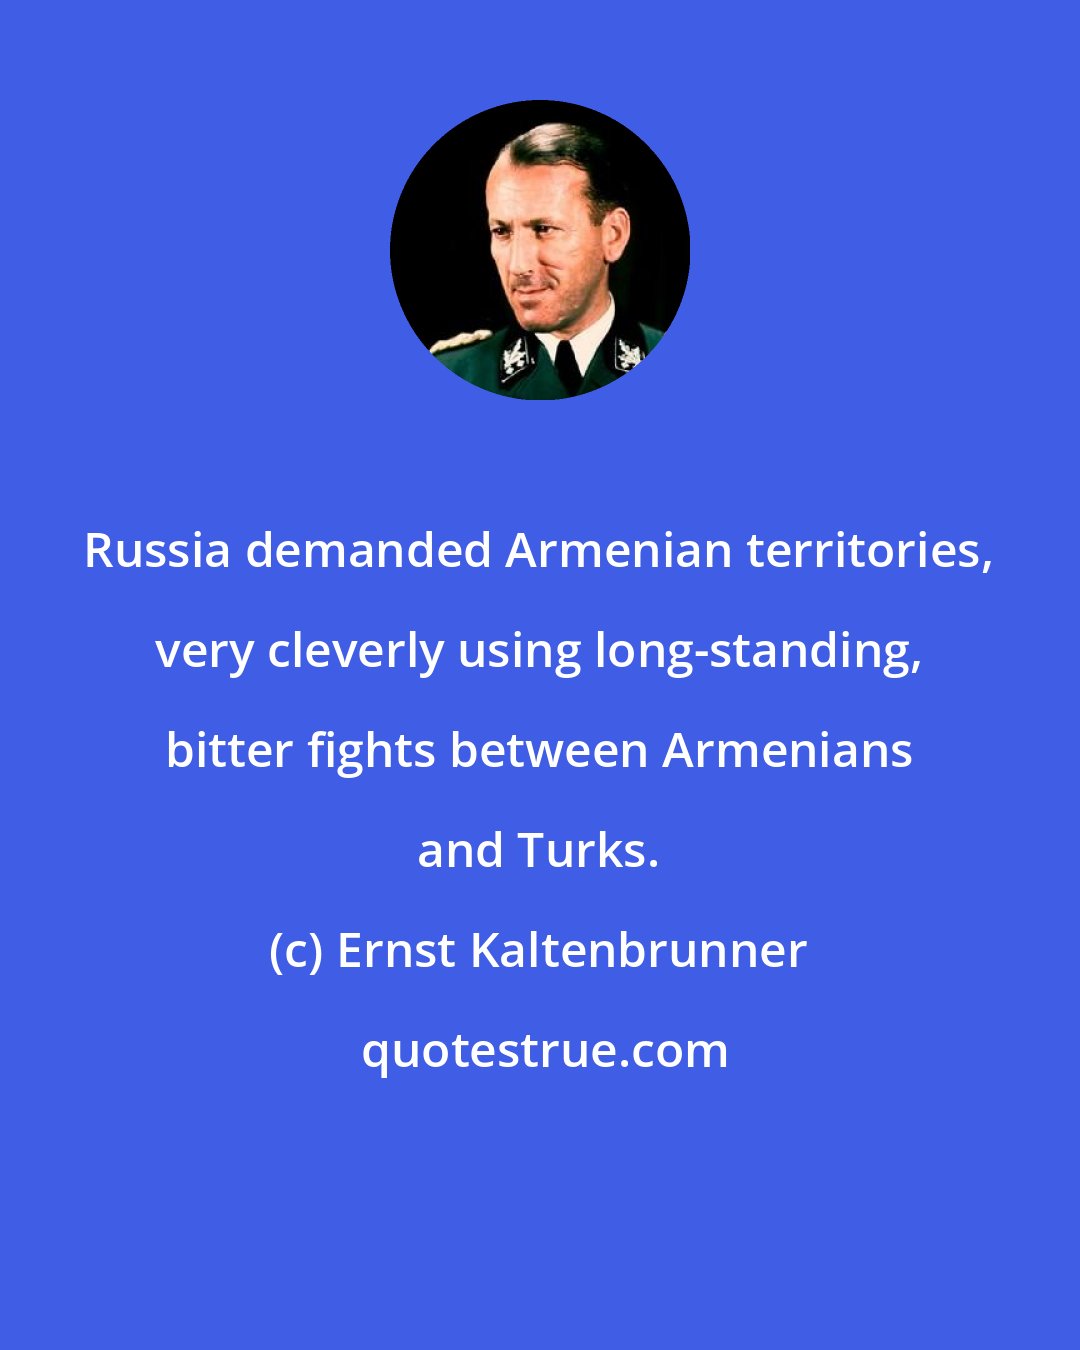 Ernst Kaltenbrunner: Russia demanded Armenian territories, very cleverly using long-standing, bitter fights between Armenians and Turks.